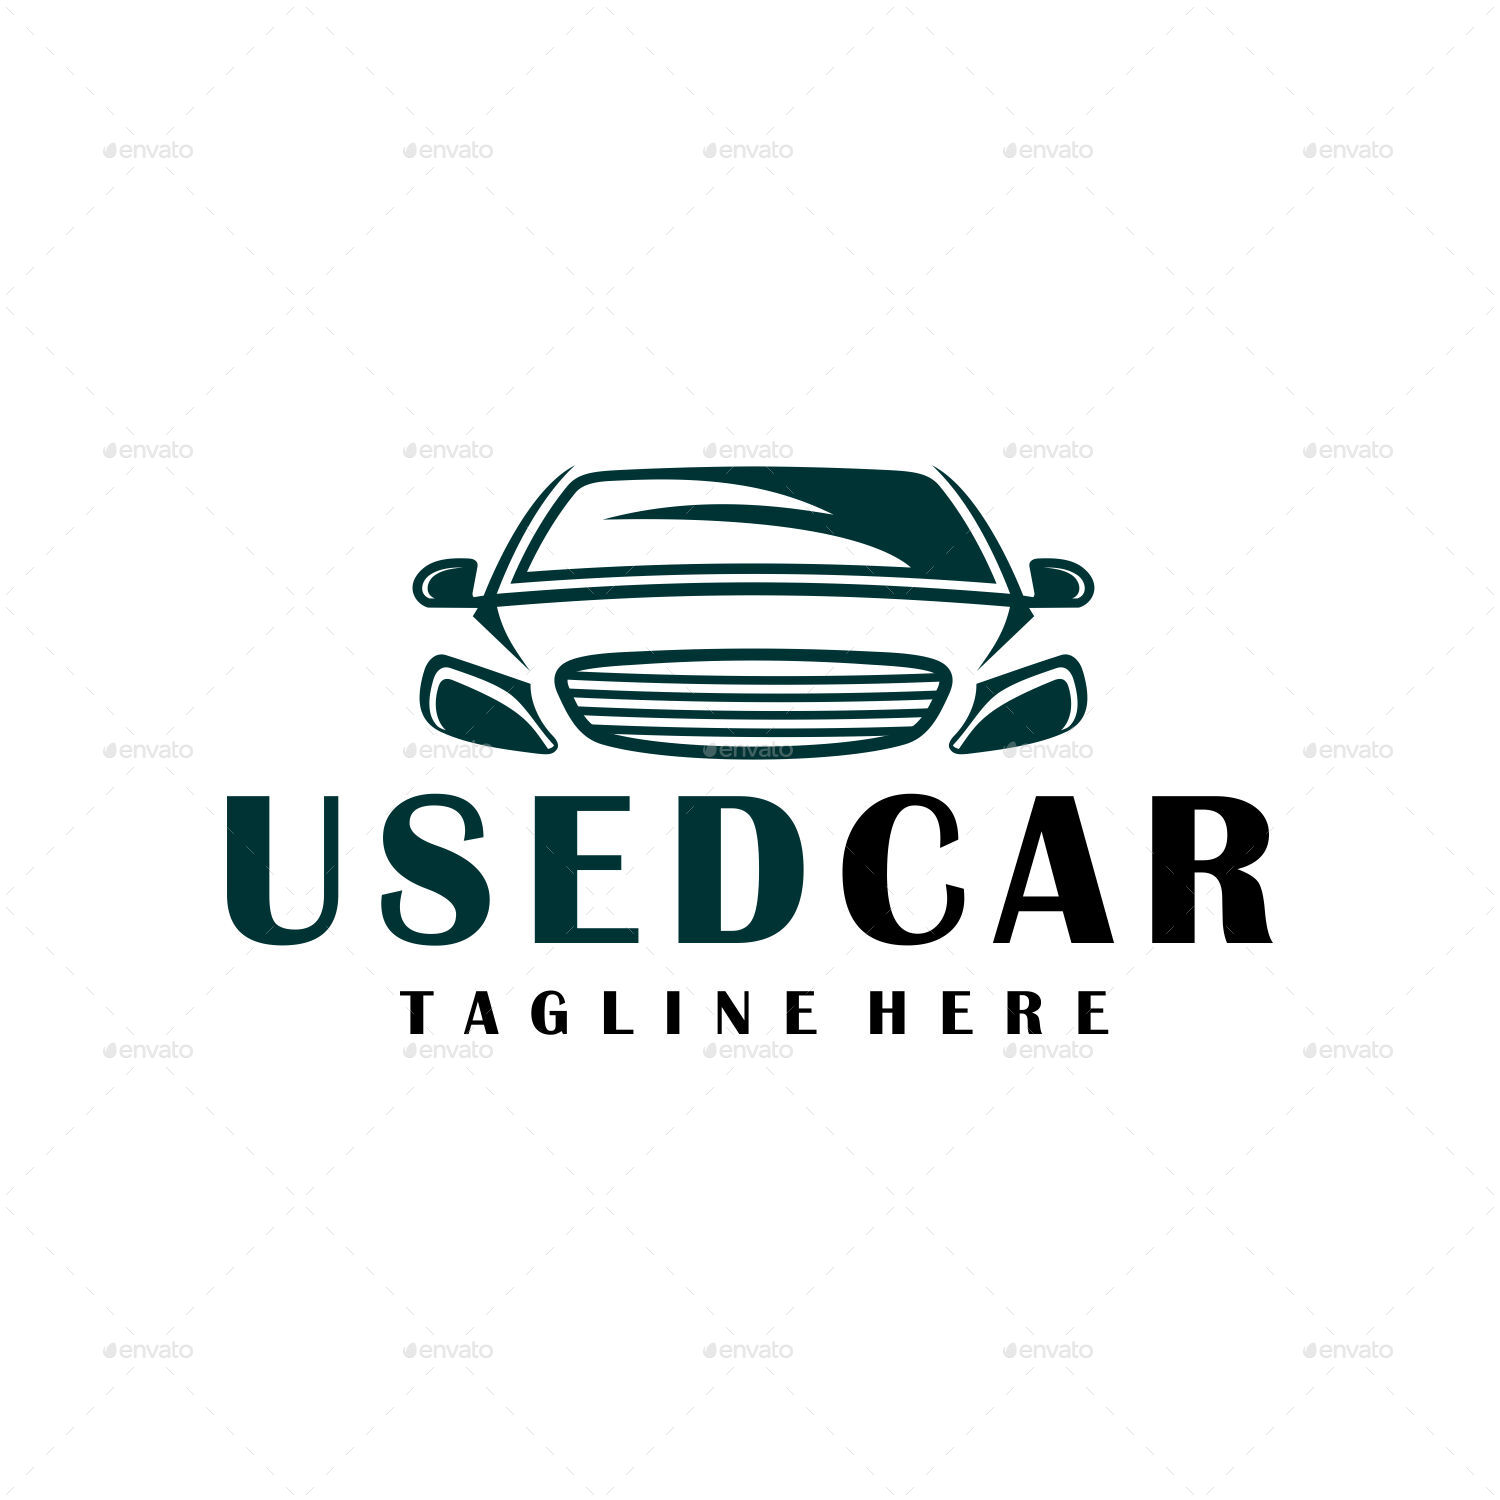 Used Car Logo 267 modern bold used car logo designs for used car a used
car business